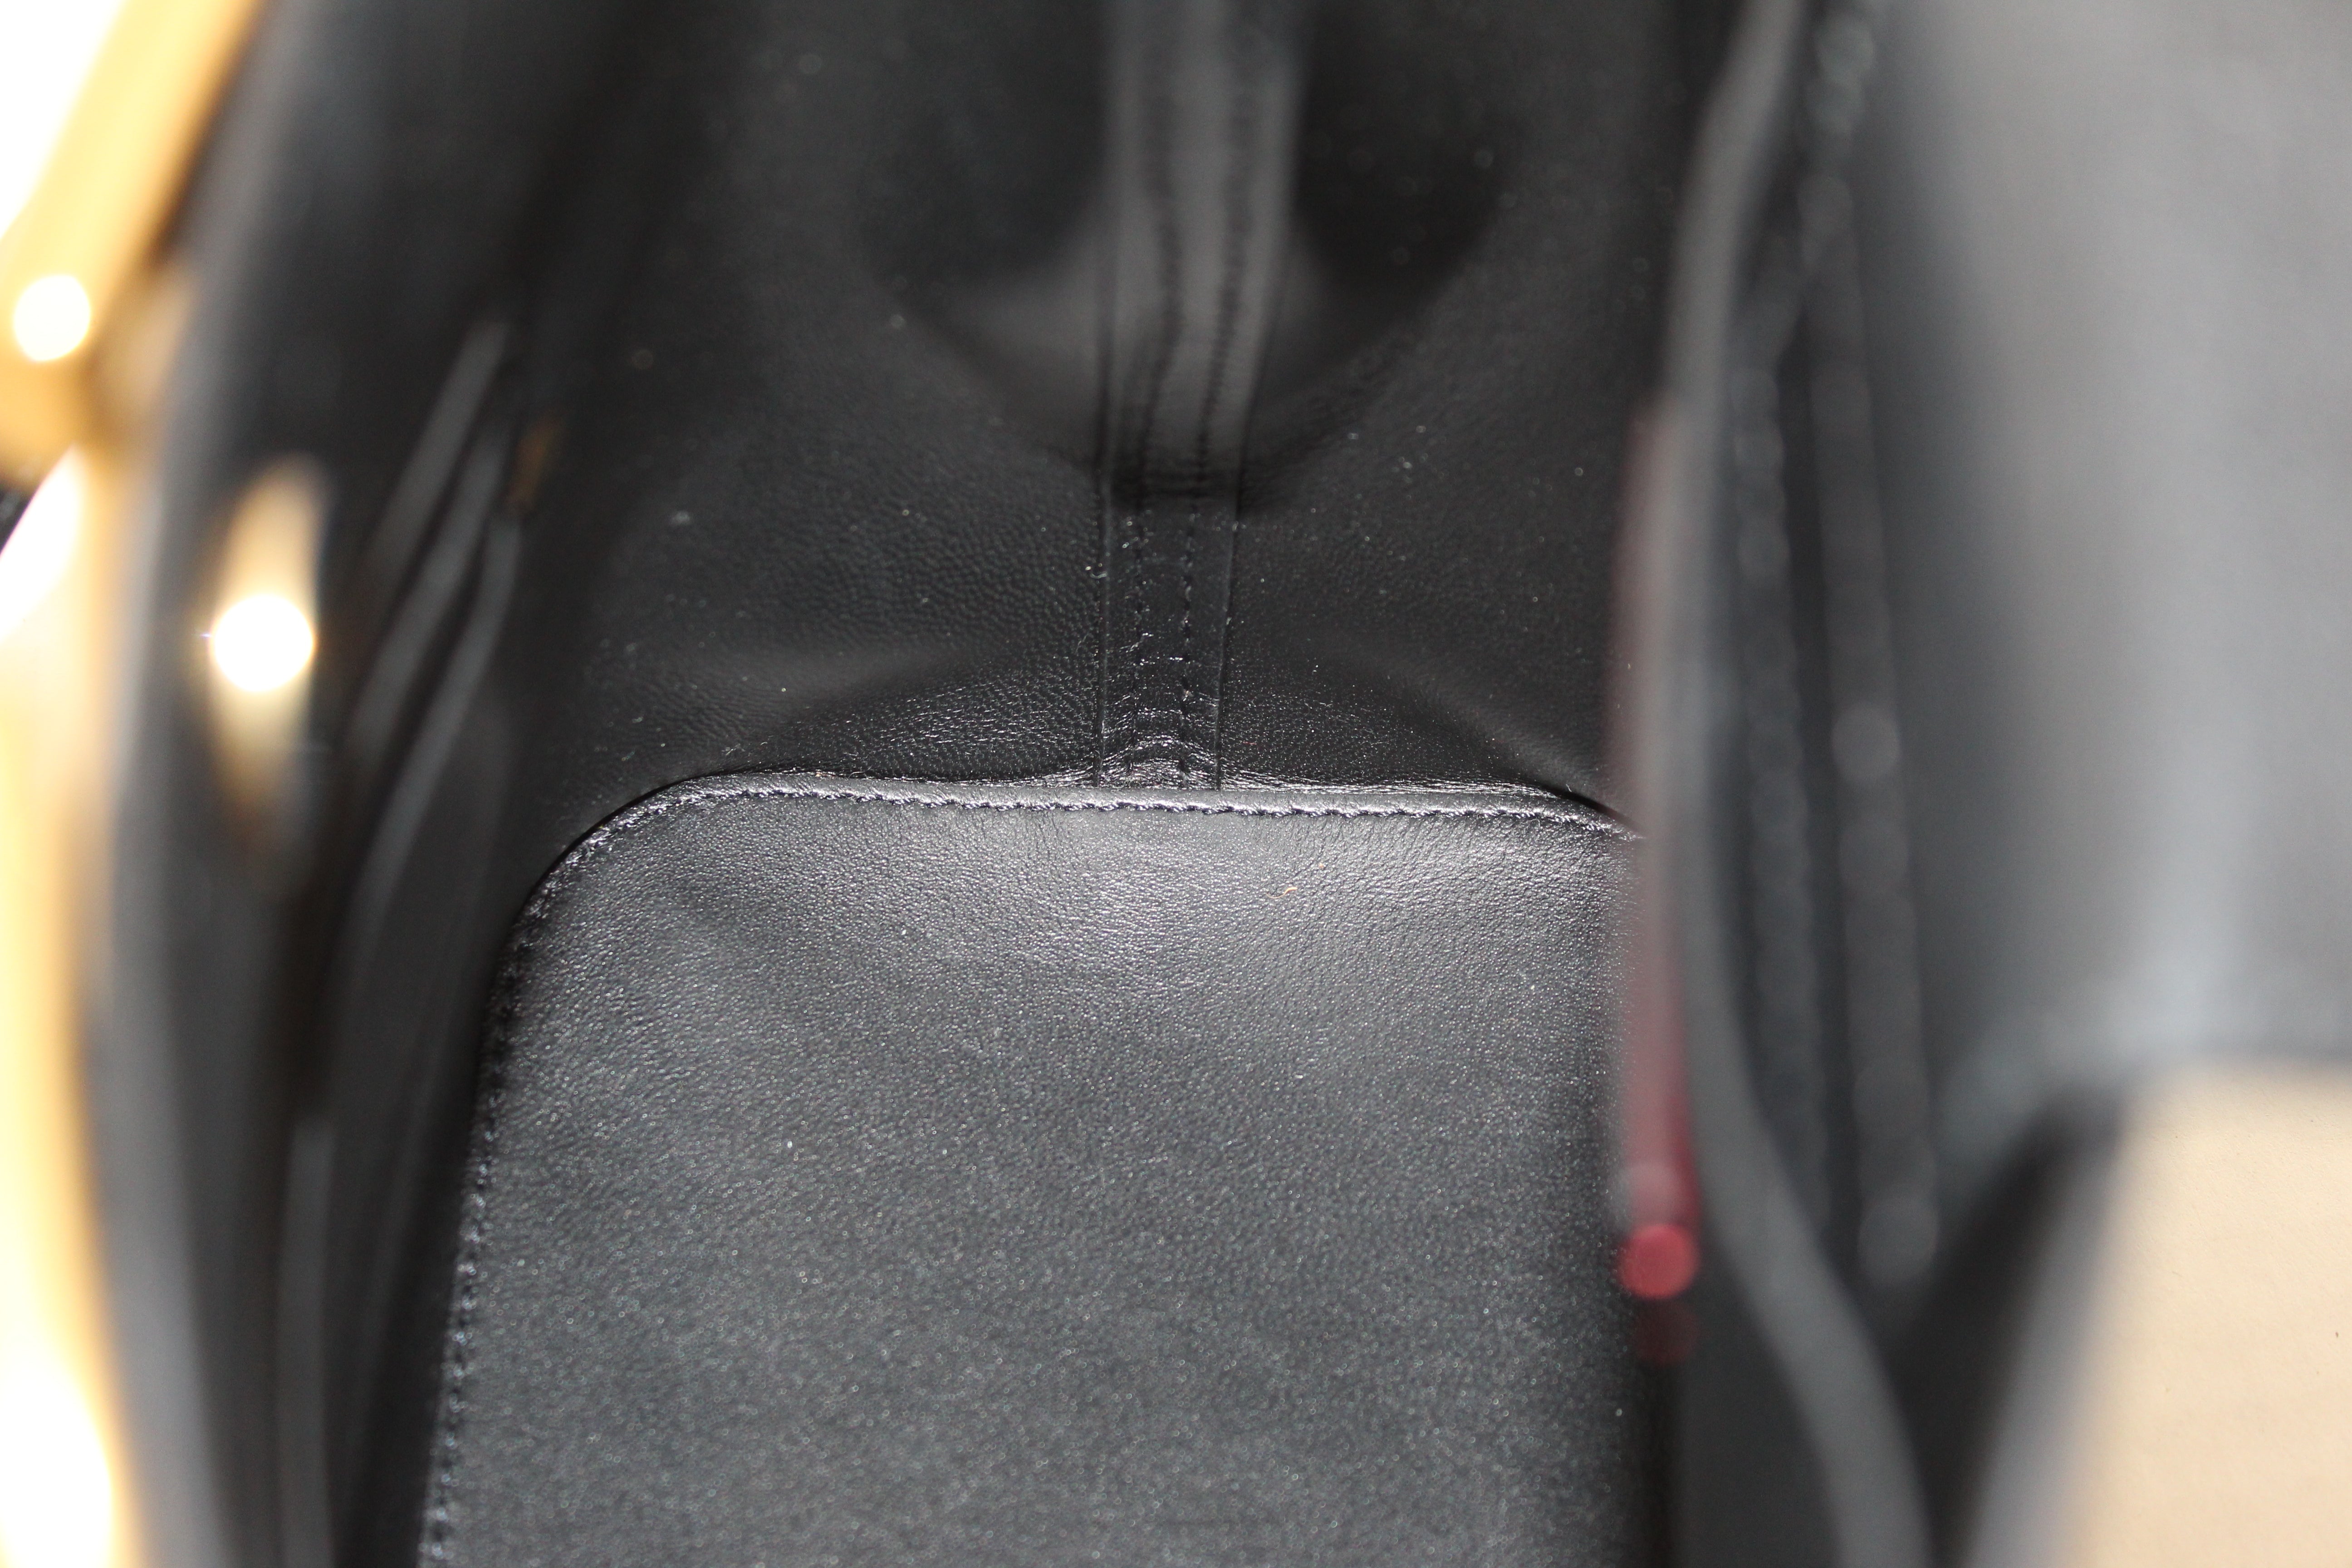 Authentic Valentino Black Leather Supervee Top Handle Bag